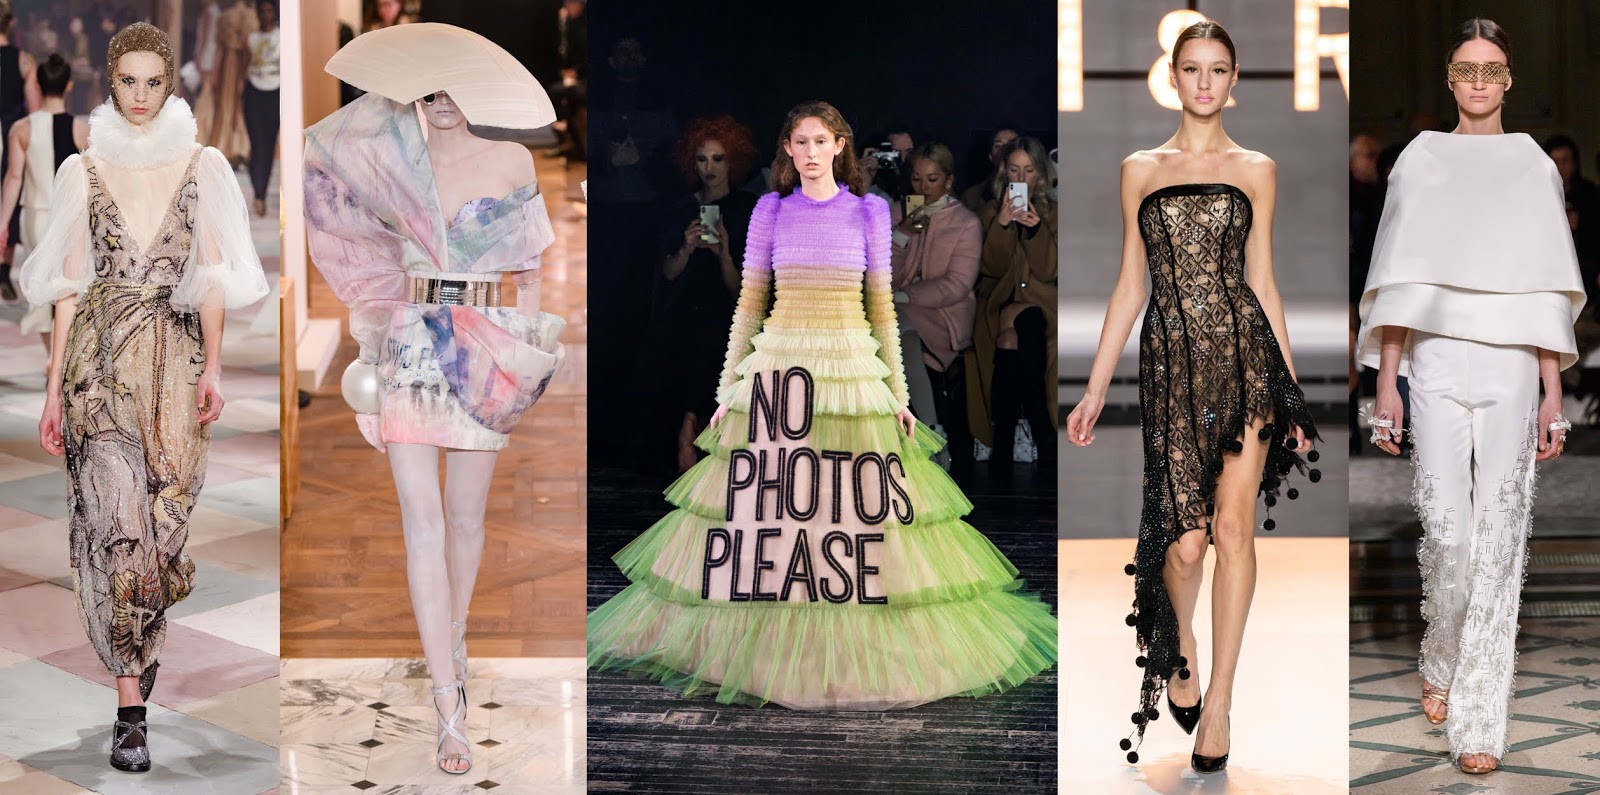 Fashion statements at Haute Couture week - Moda 2.0: Blog de moda colombiano